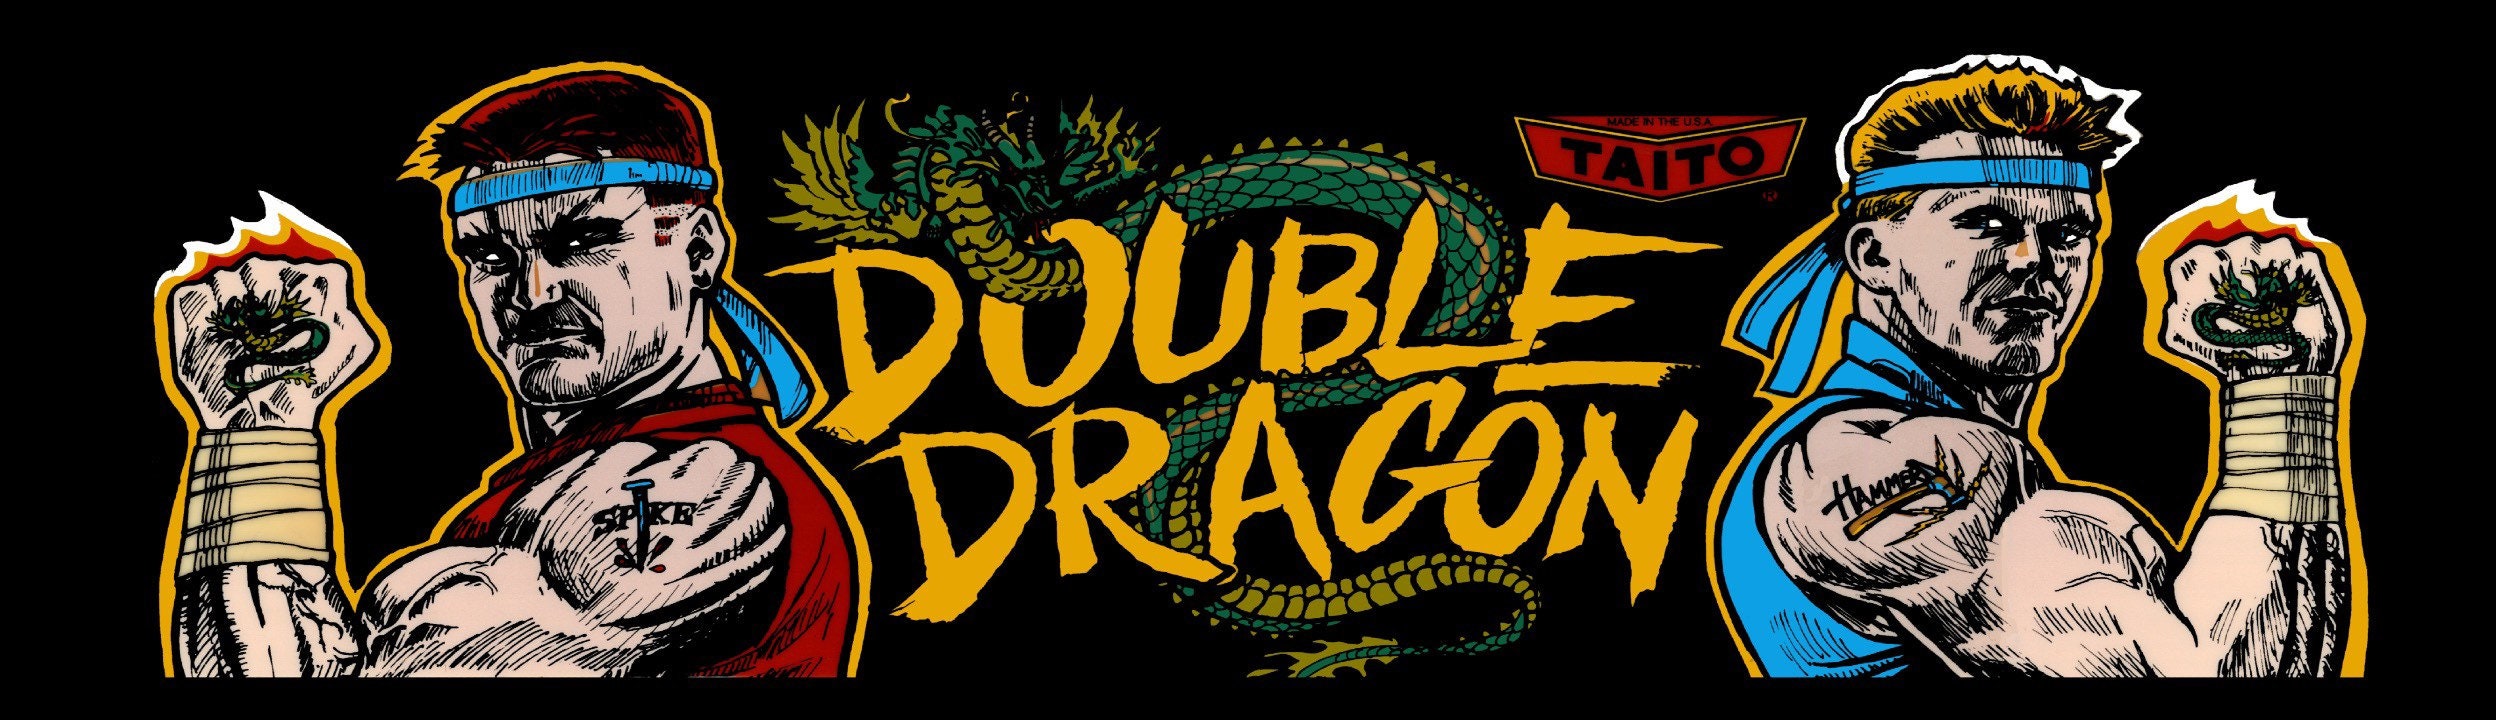 iiRcade Double Dragon Complete Graphics Kit